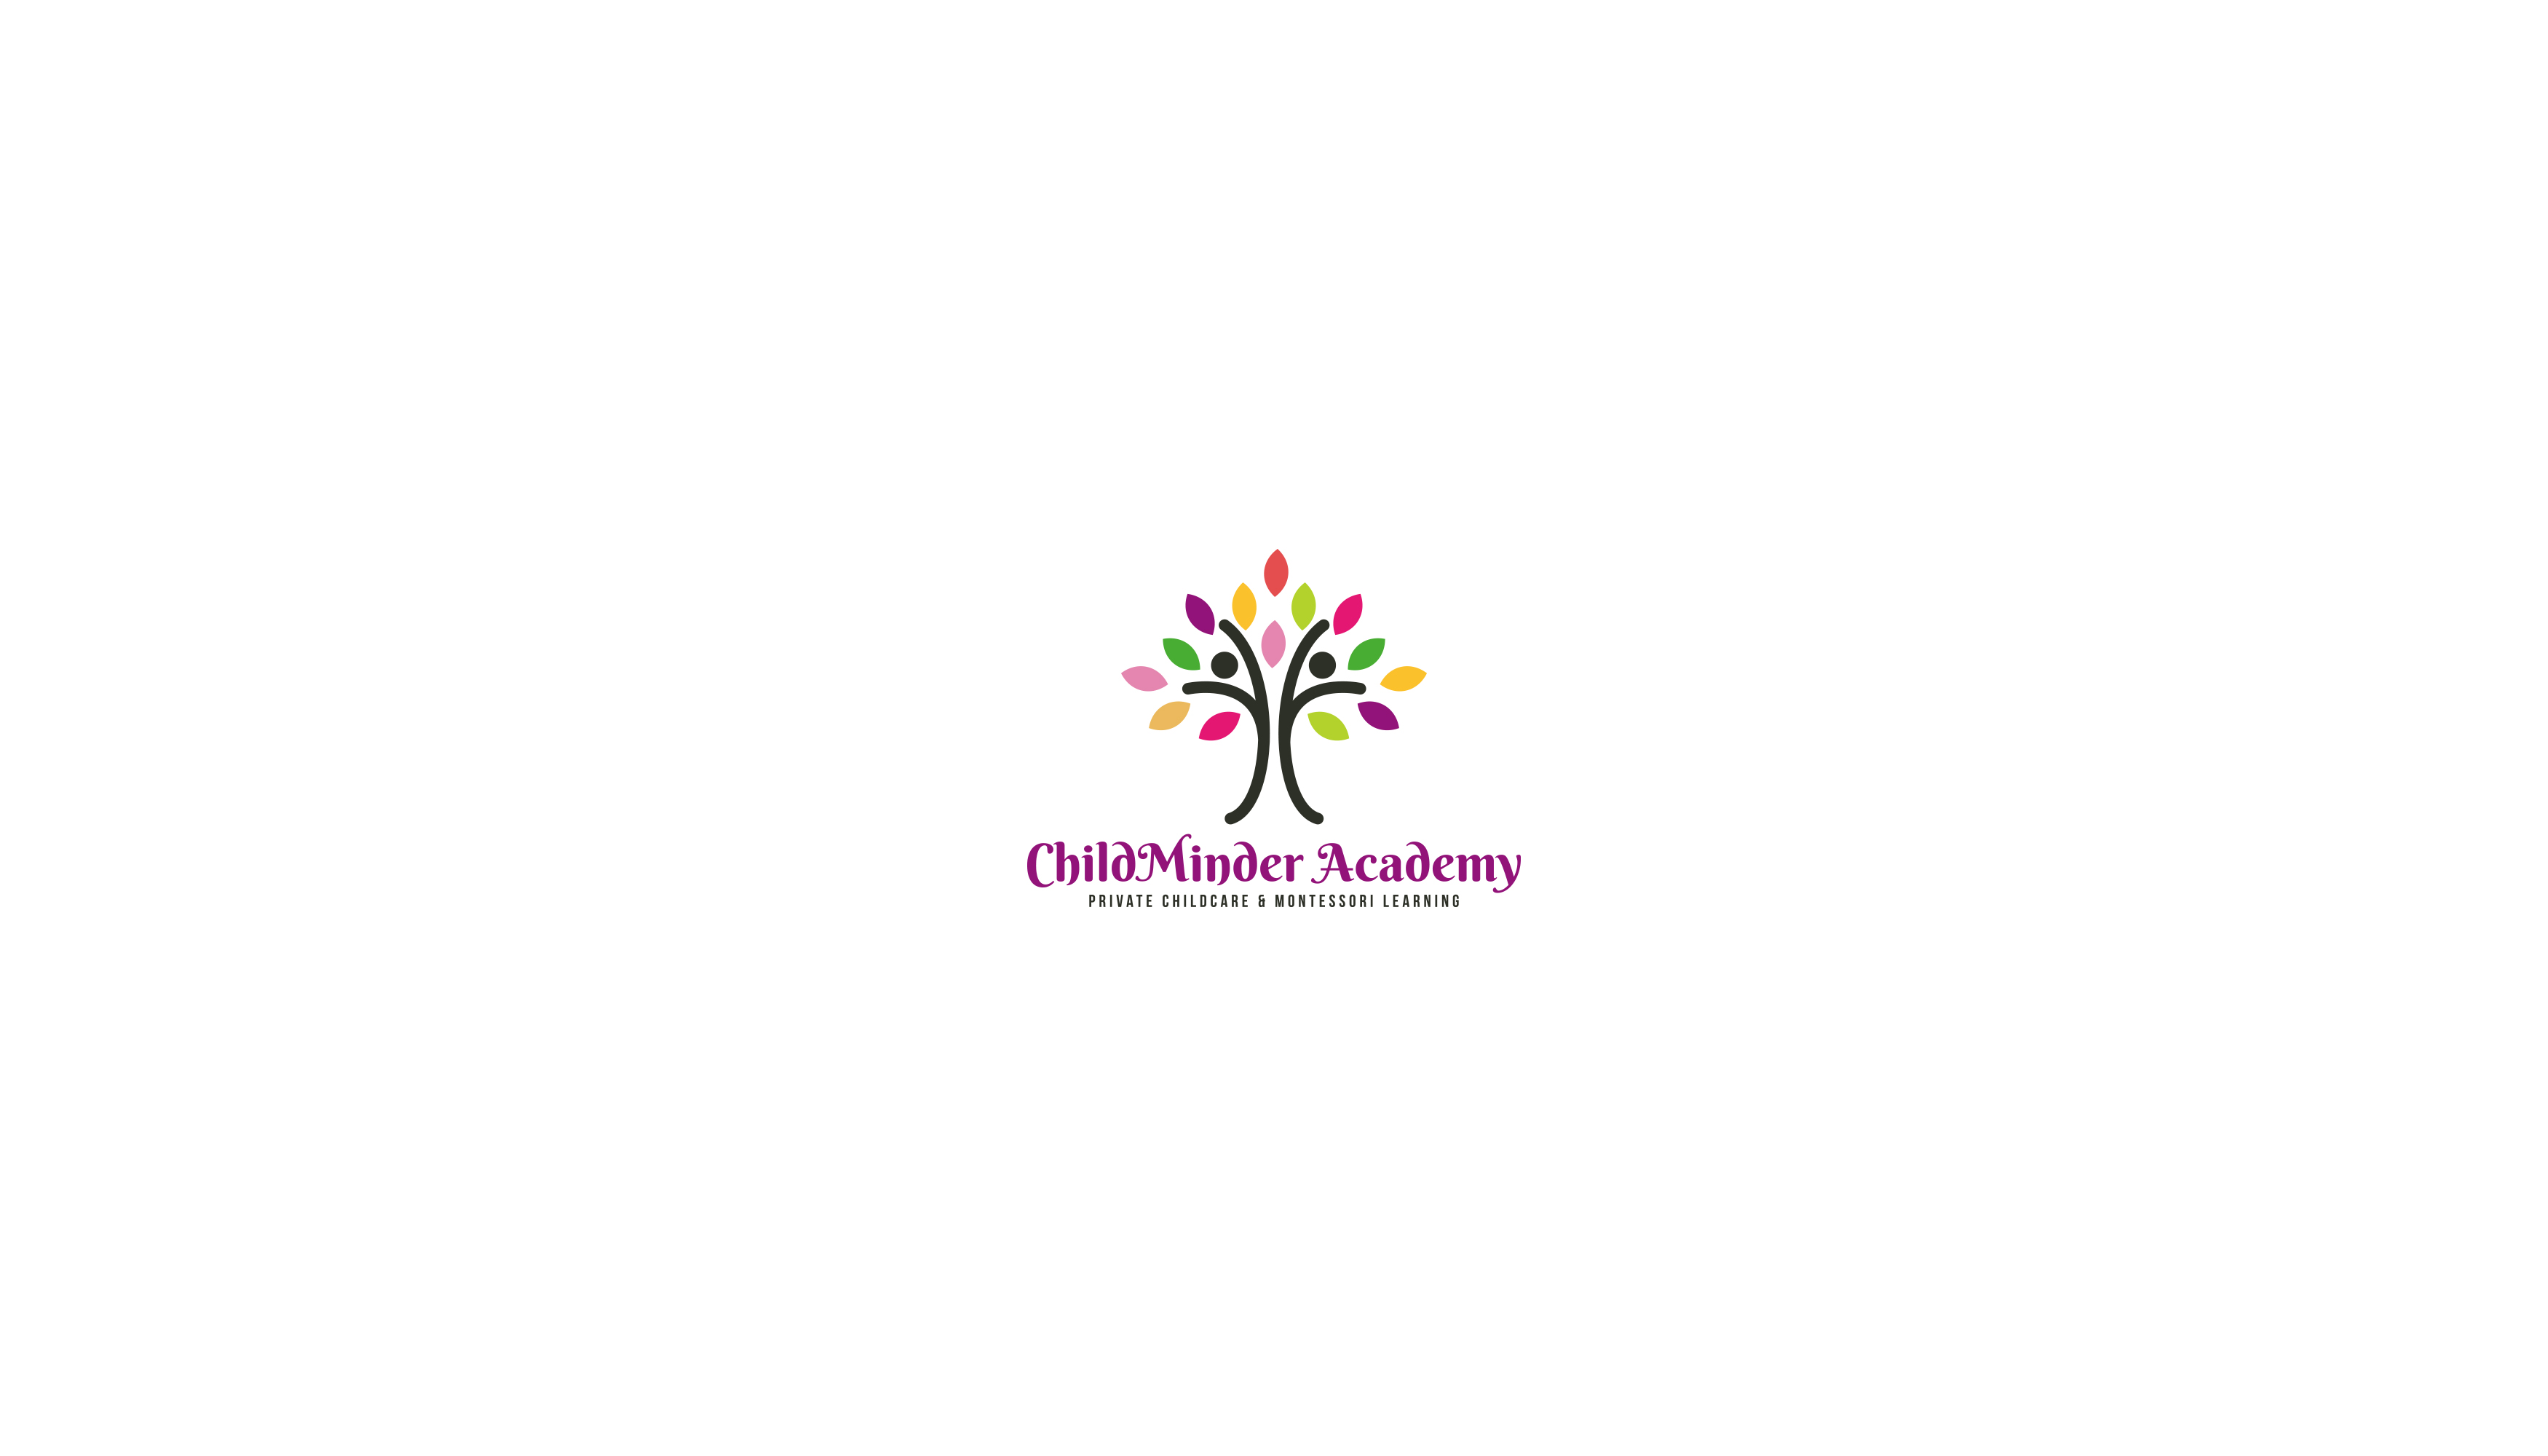 ChildMinder Academy Design #8